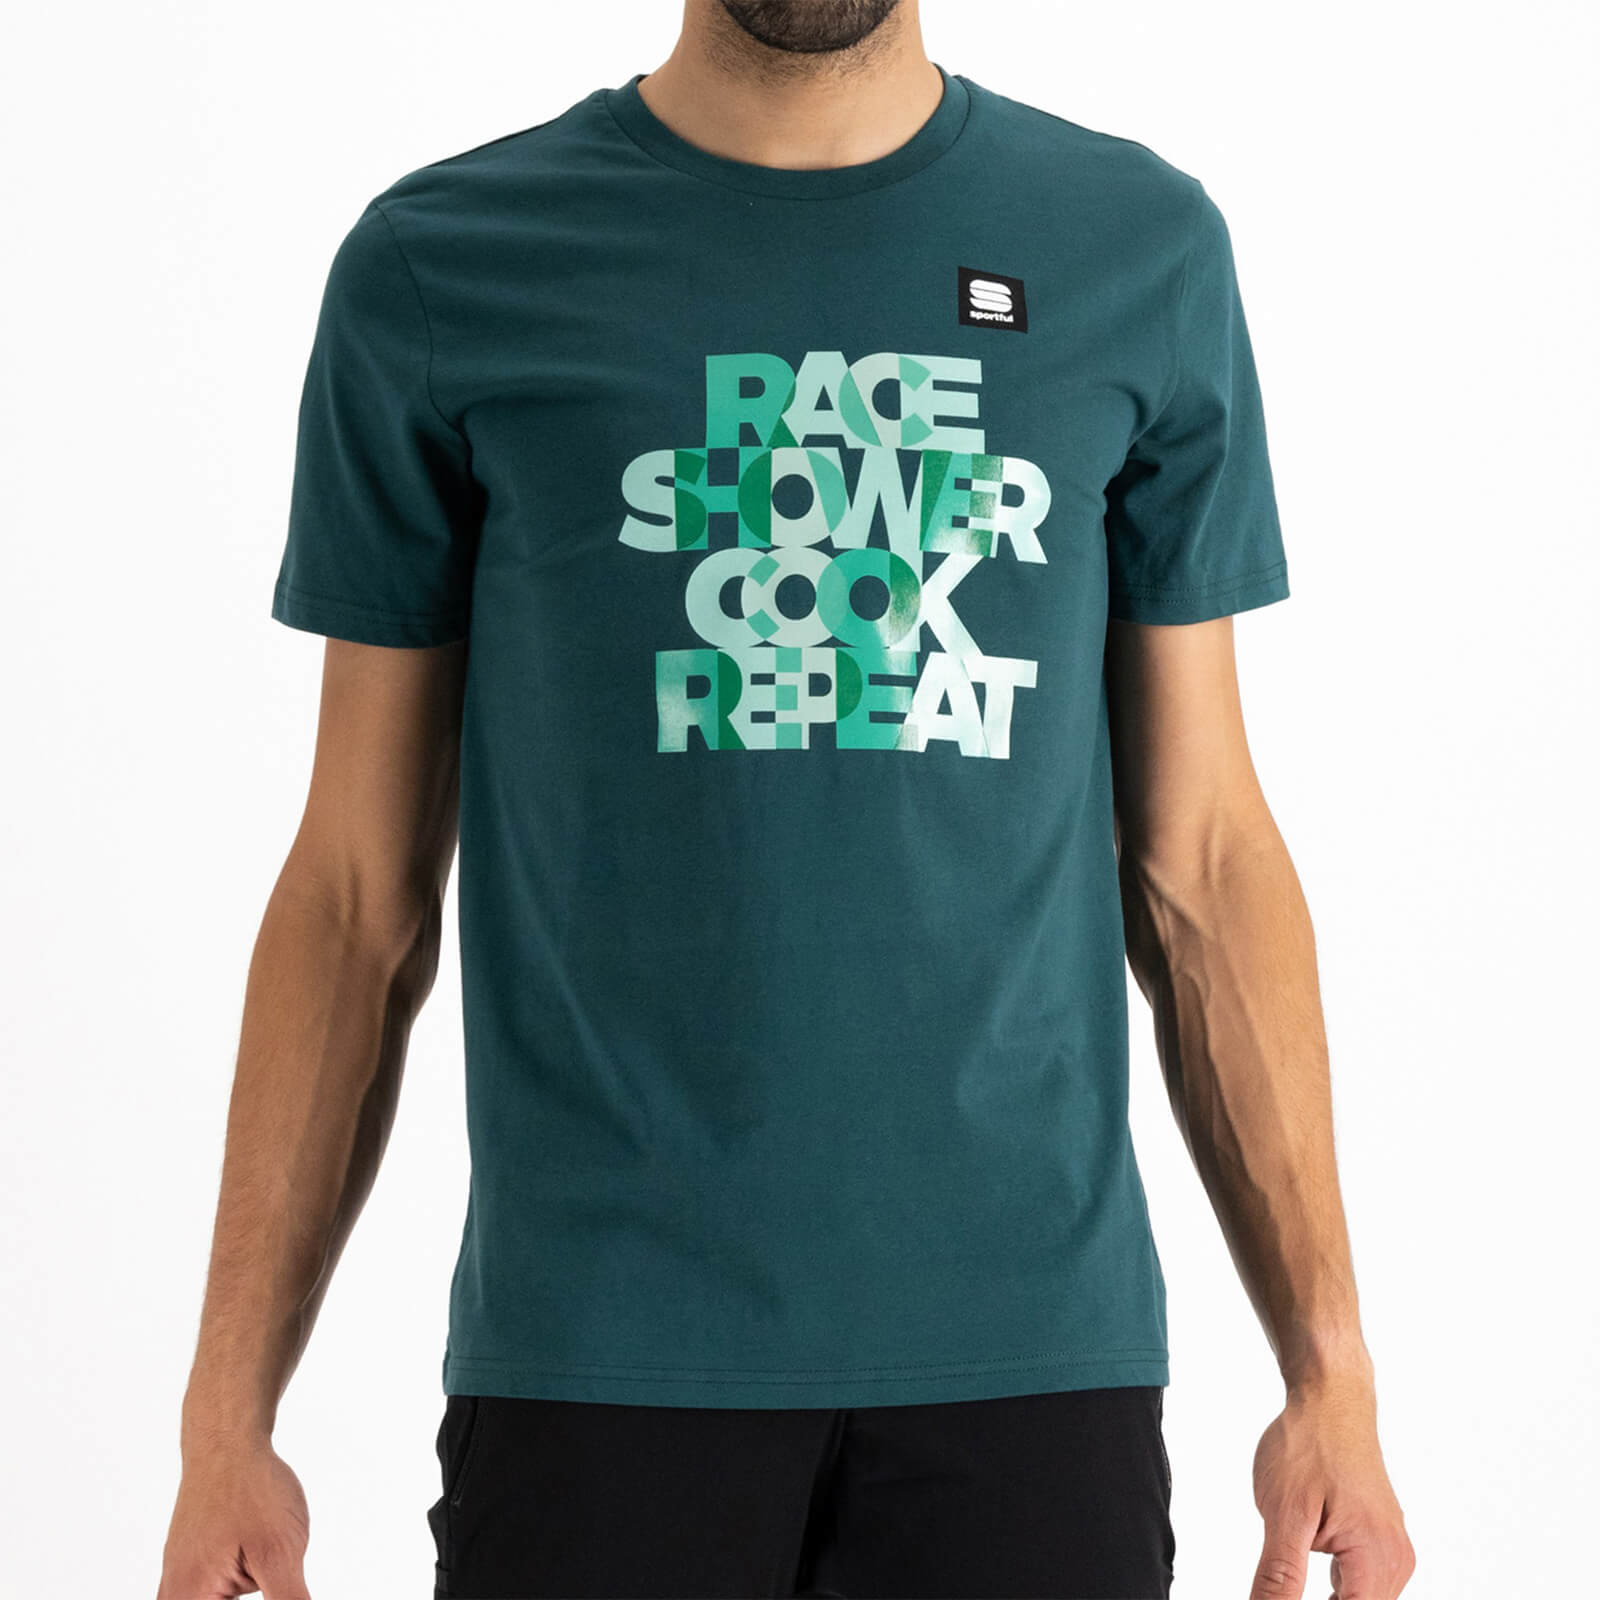 Sportful Bora Hansgrohe Race Shower Cook Repeat T-Shirt - XXL